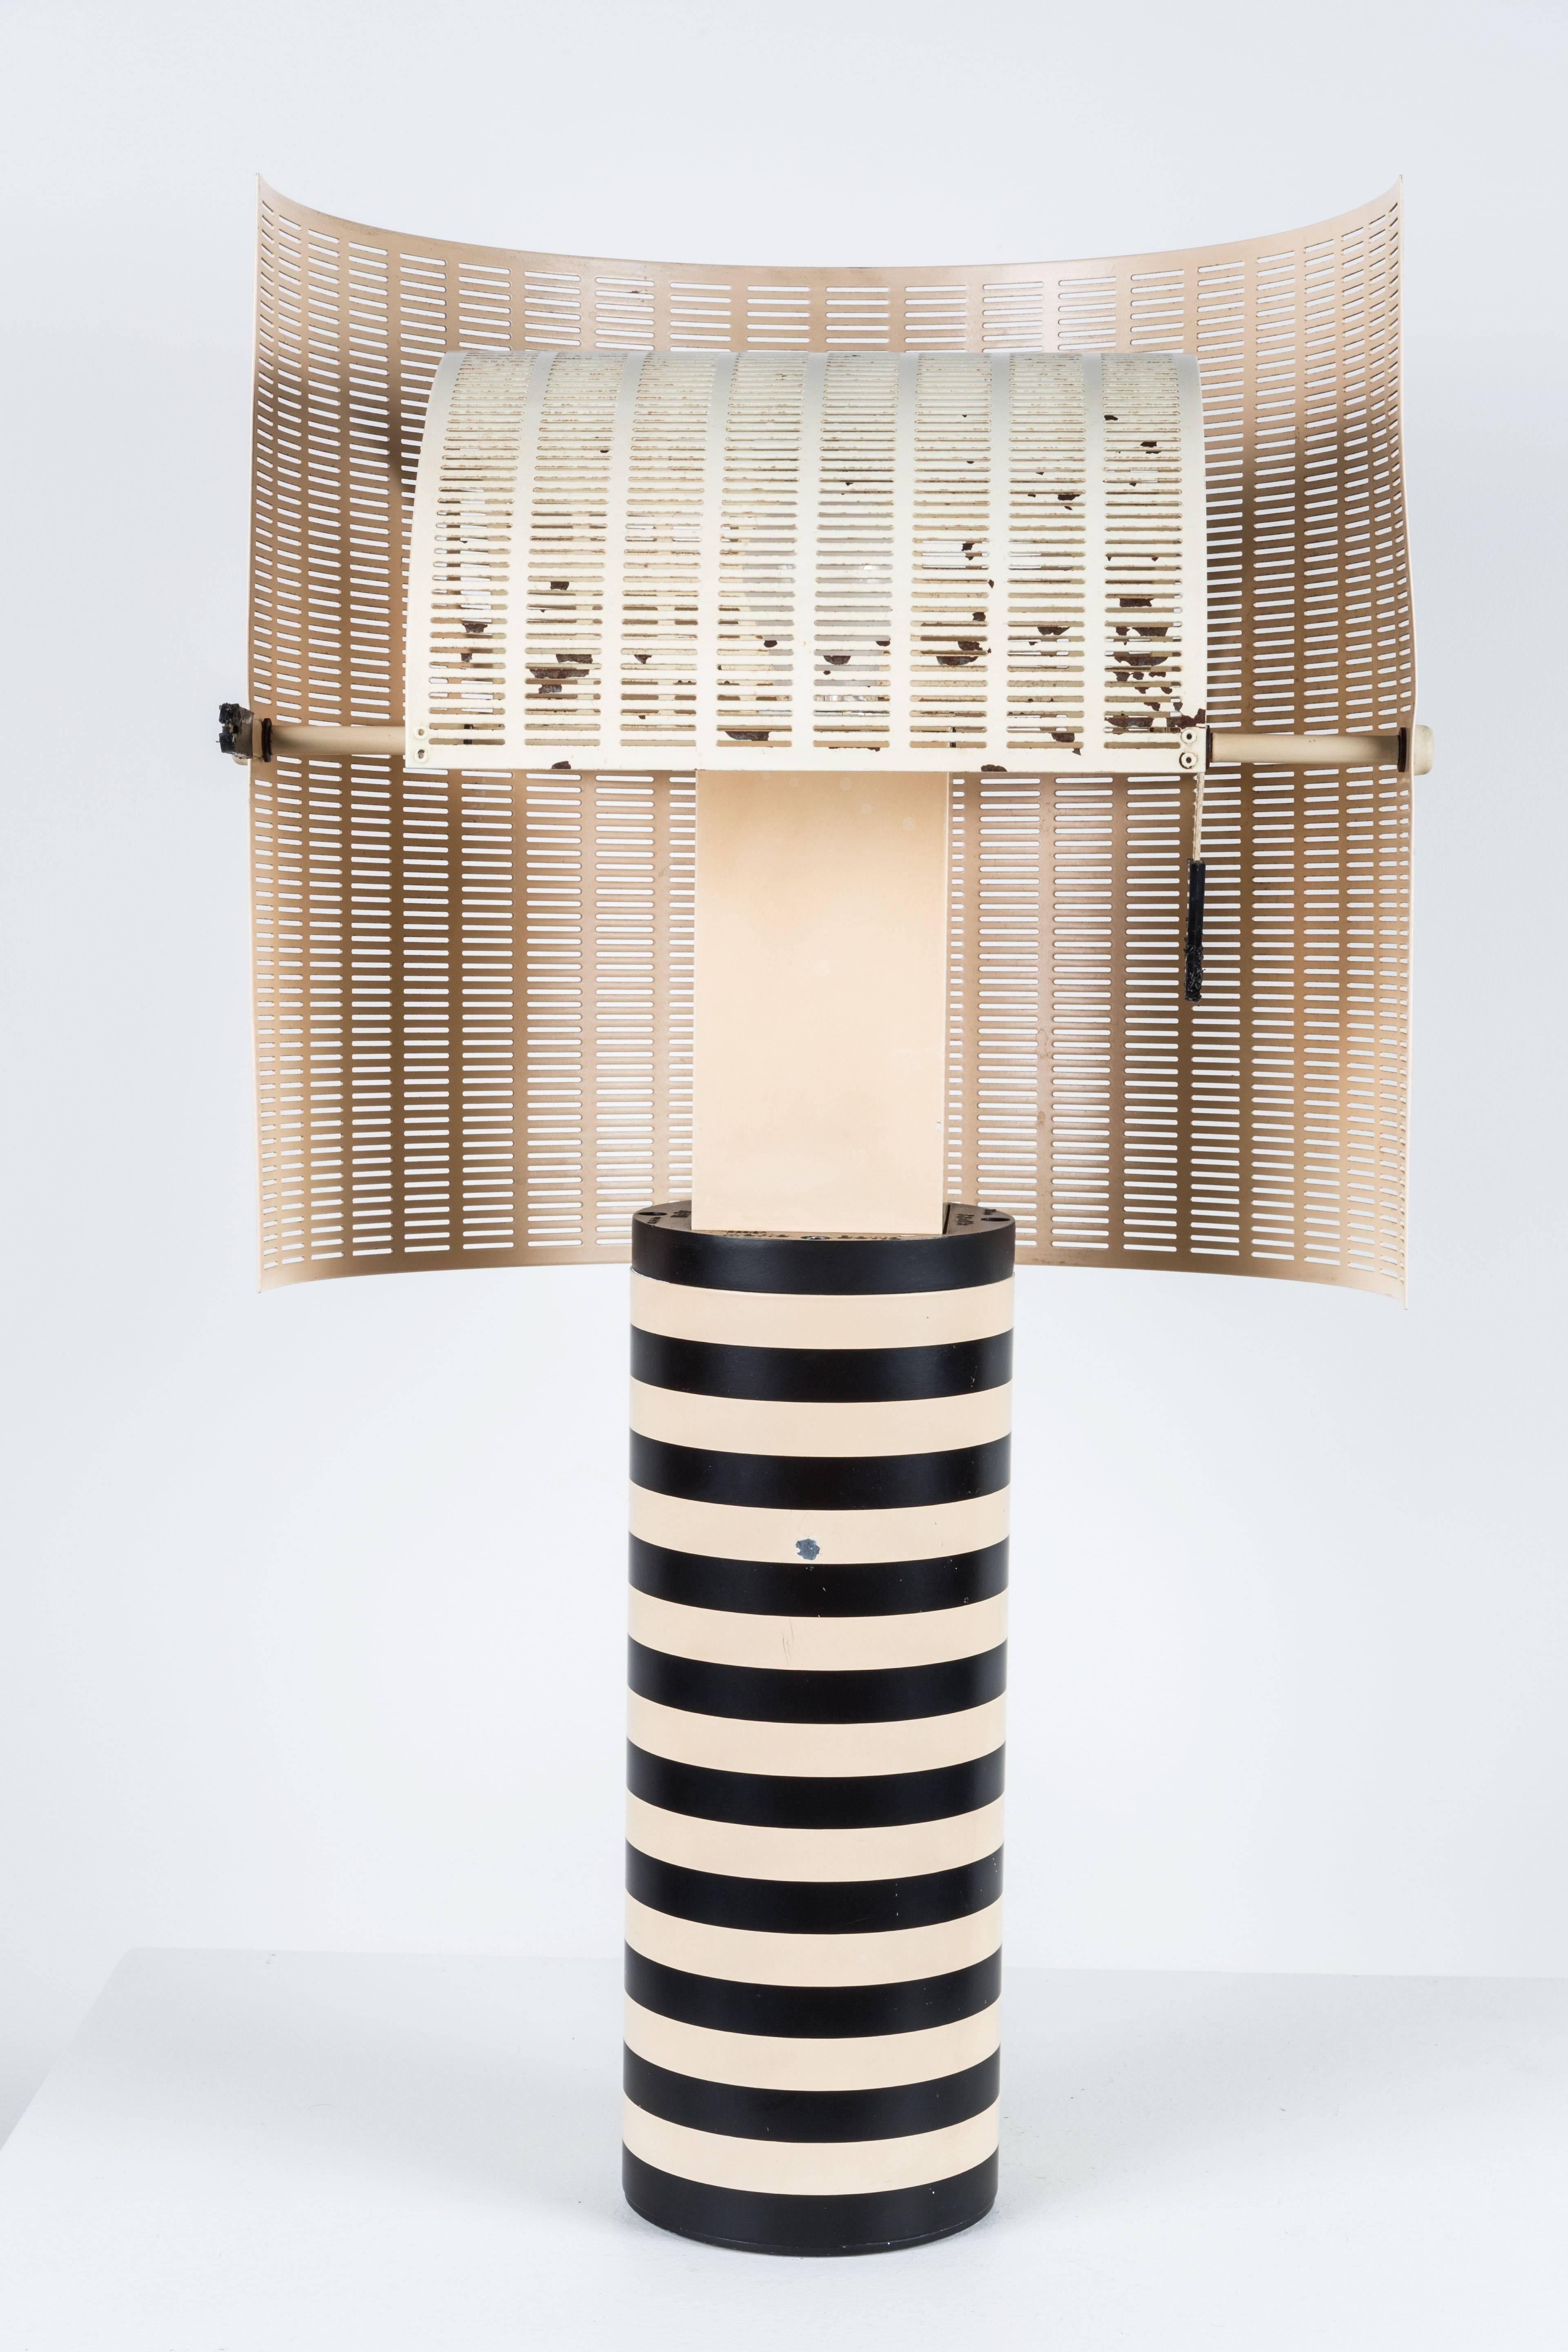 Italian Shogun Table Lamp by Mario Botta